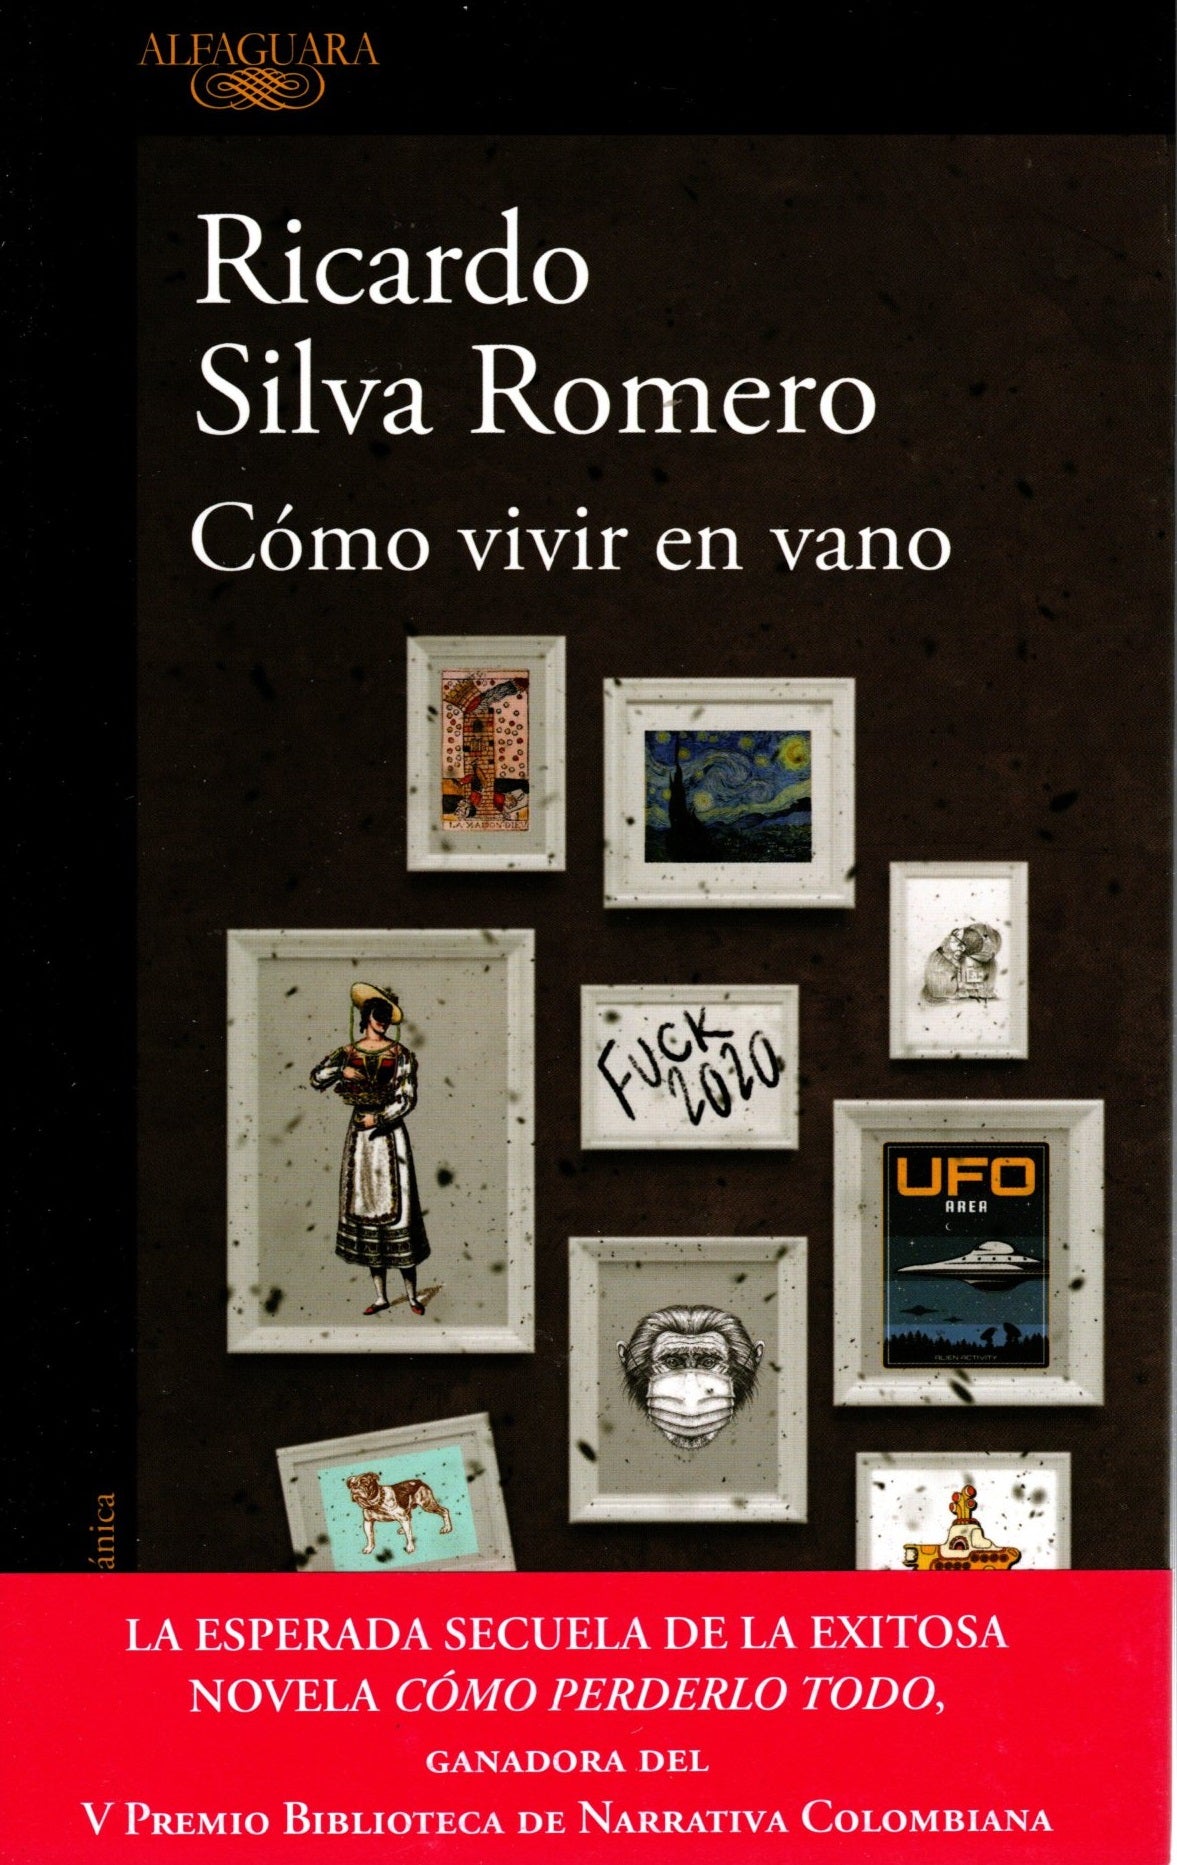 Libro Ricardo Silva Romero - Cómo vivir en vano